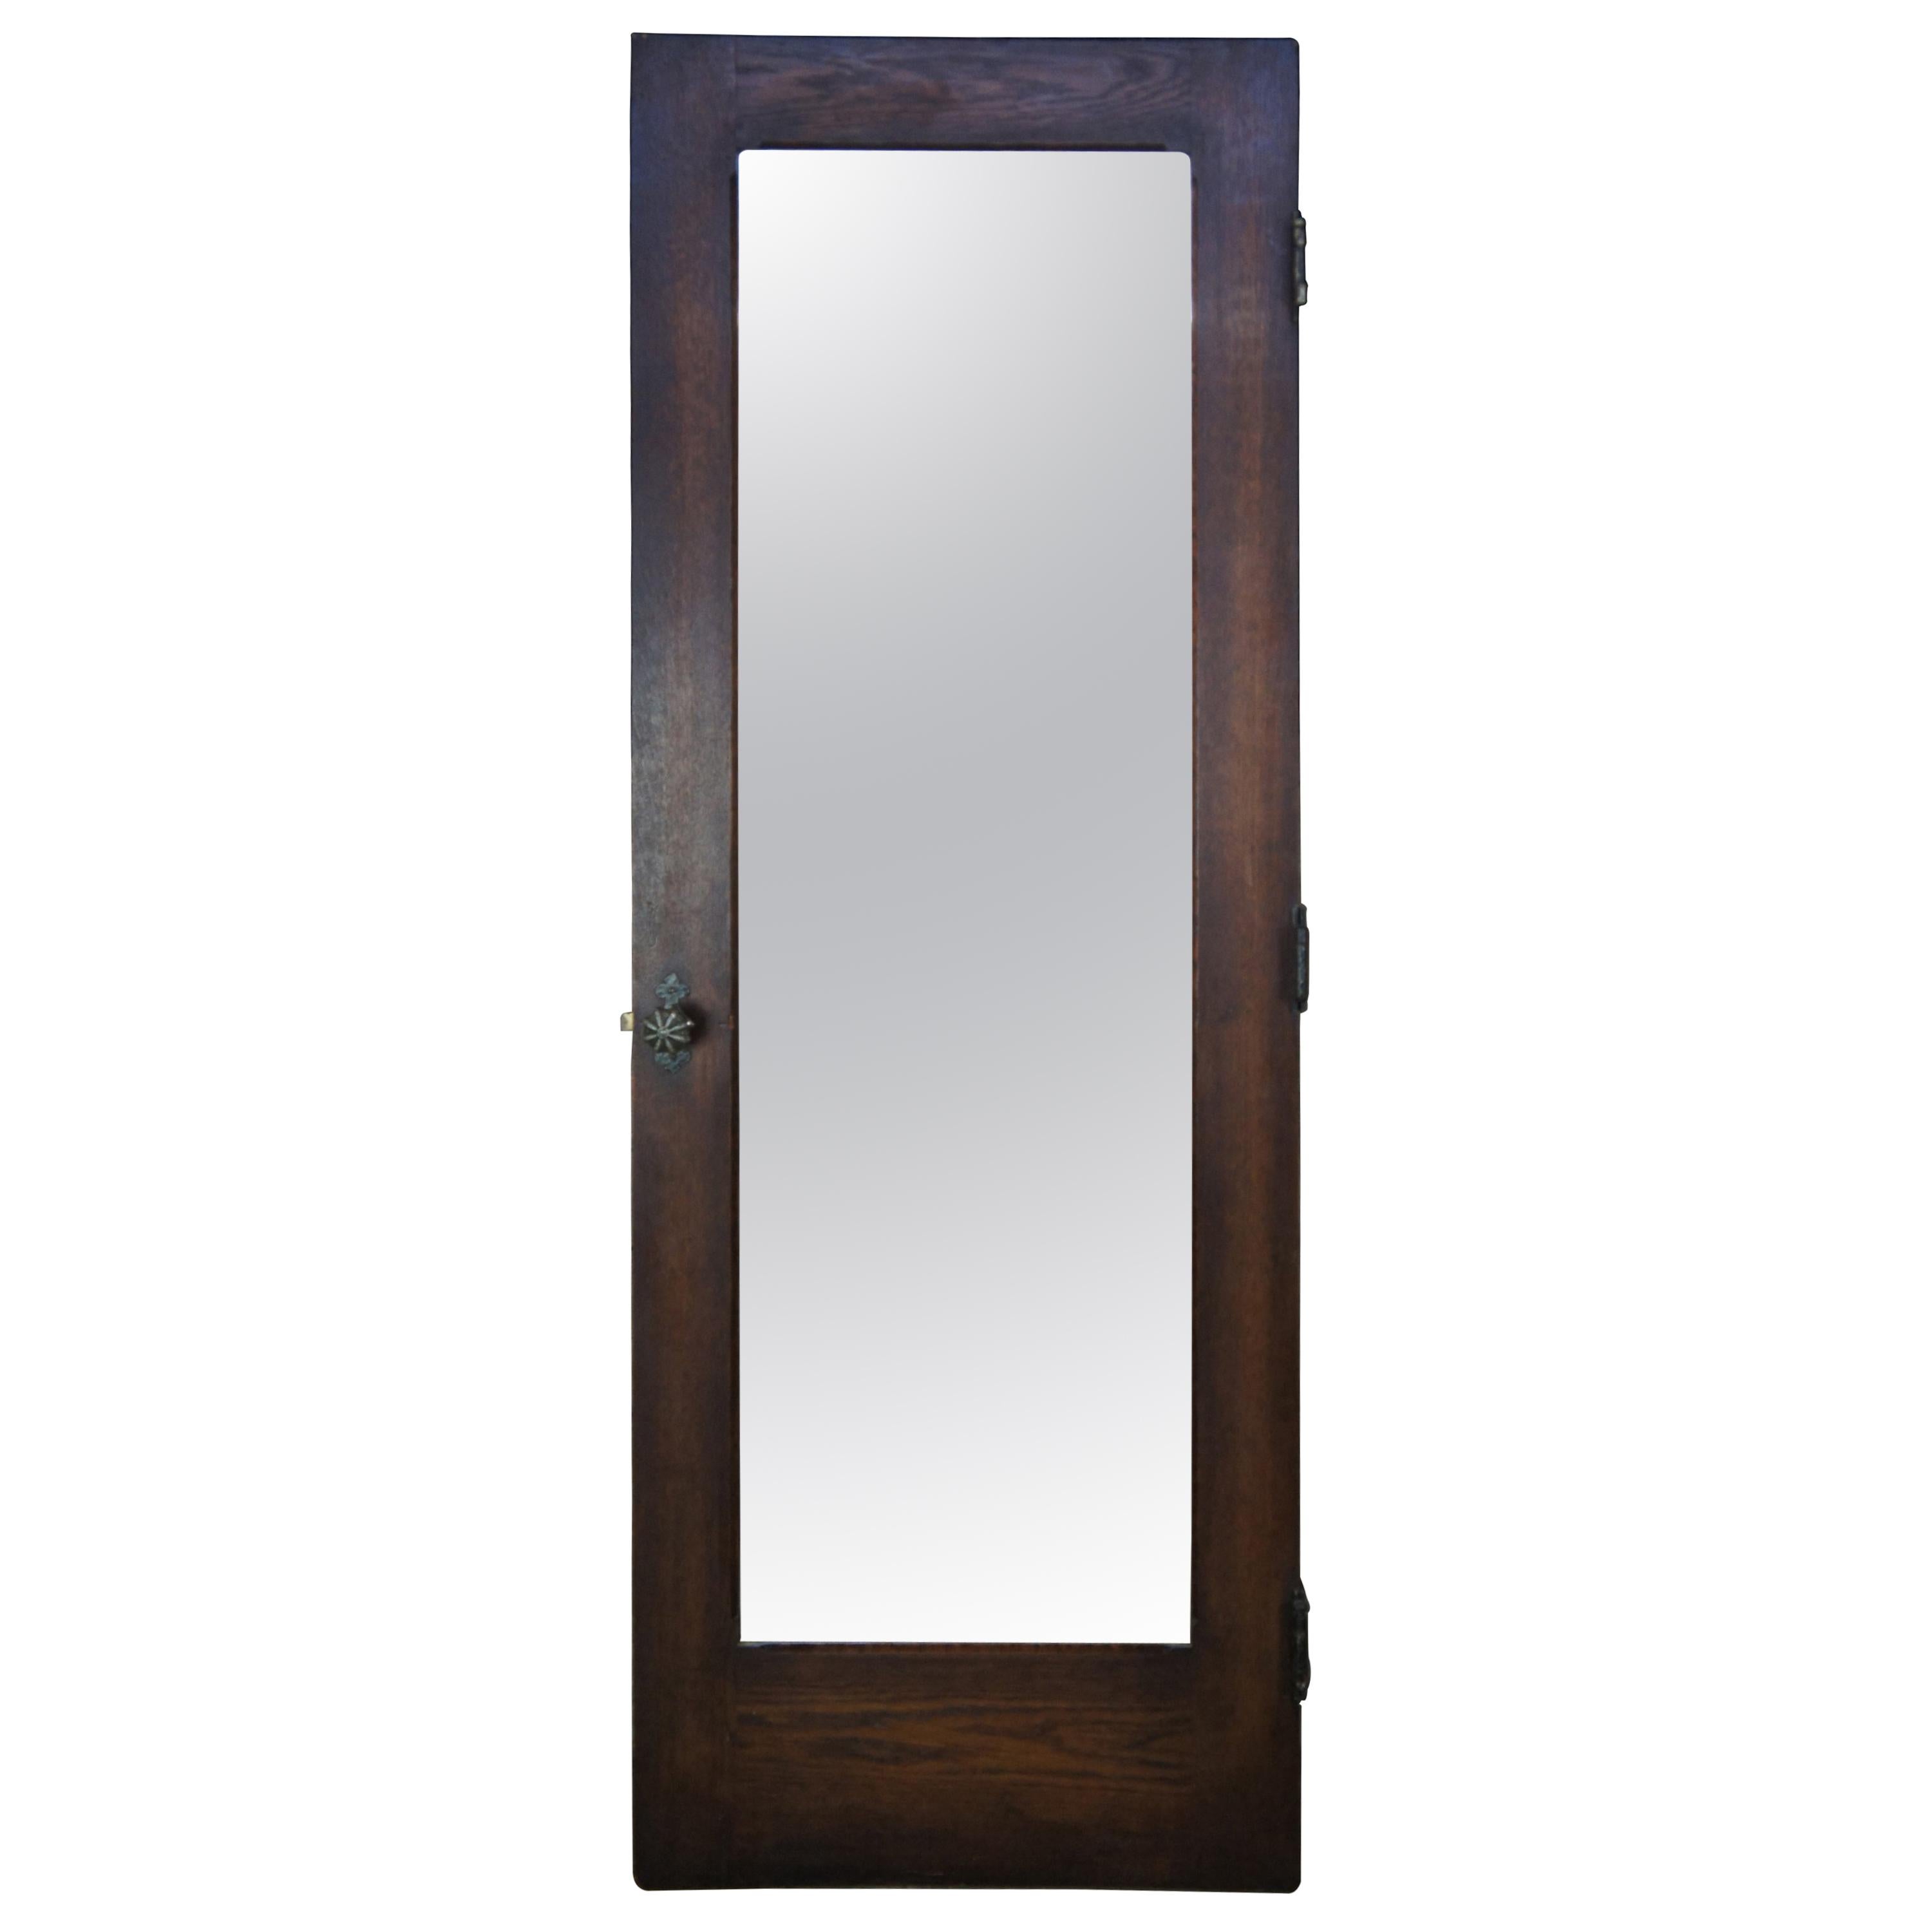 Early 20th Century Reclaimed Spanish Revival Oak Mirrored Bedroom Closet Door